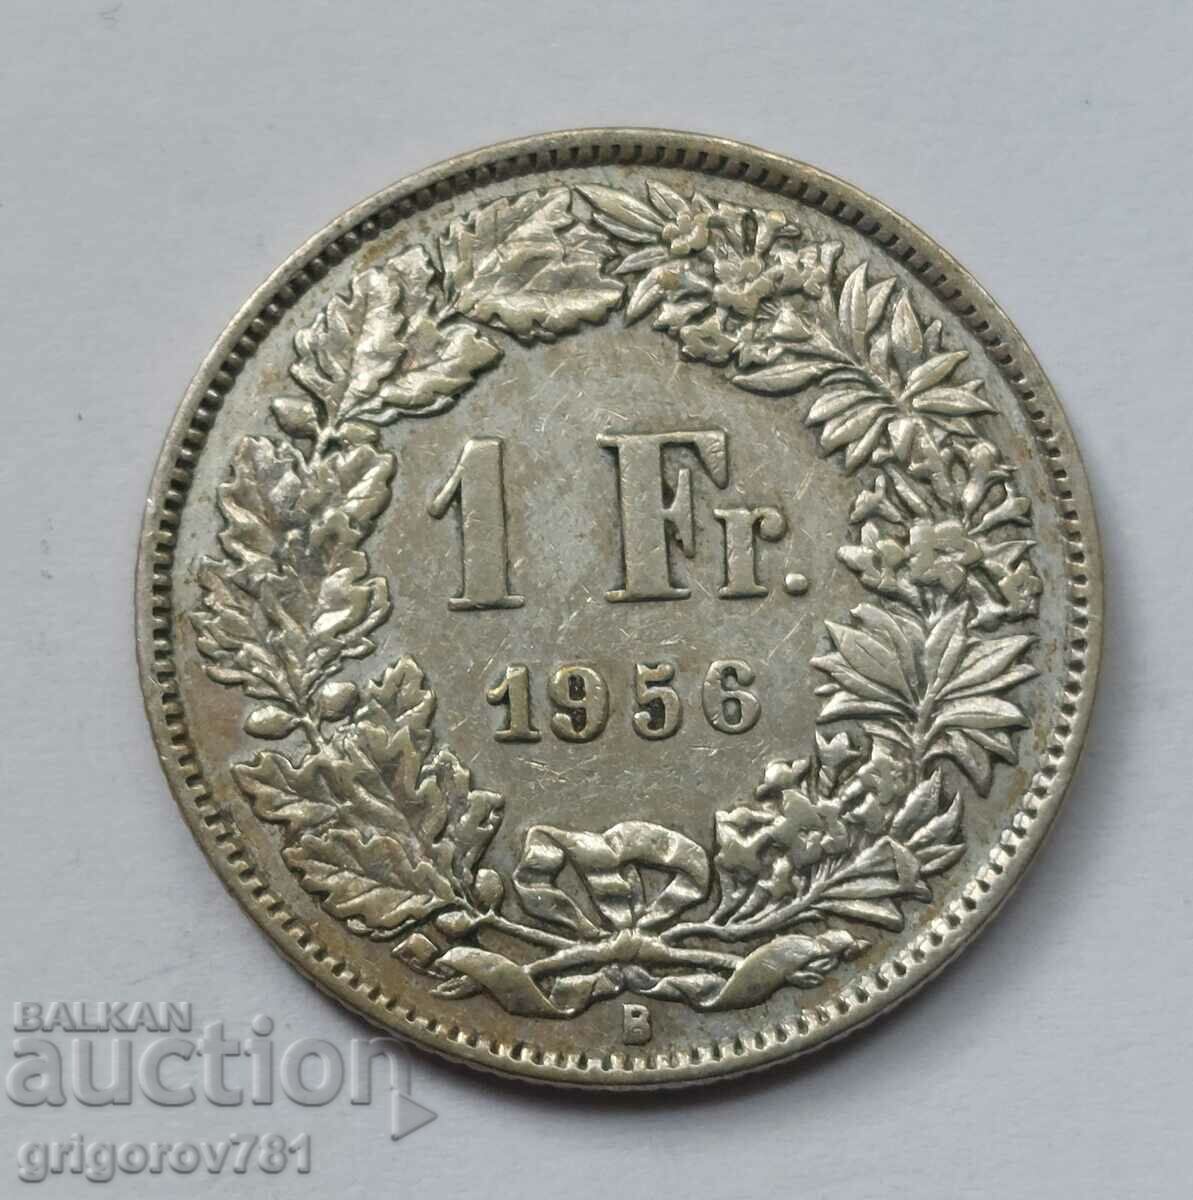 1 Franc Argint Elveția 1956 B - Monedă de argint #20